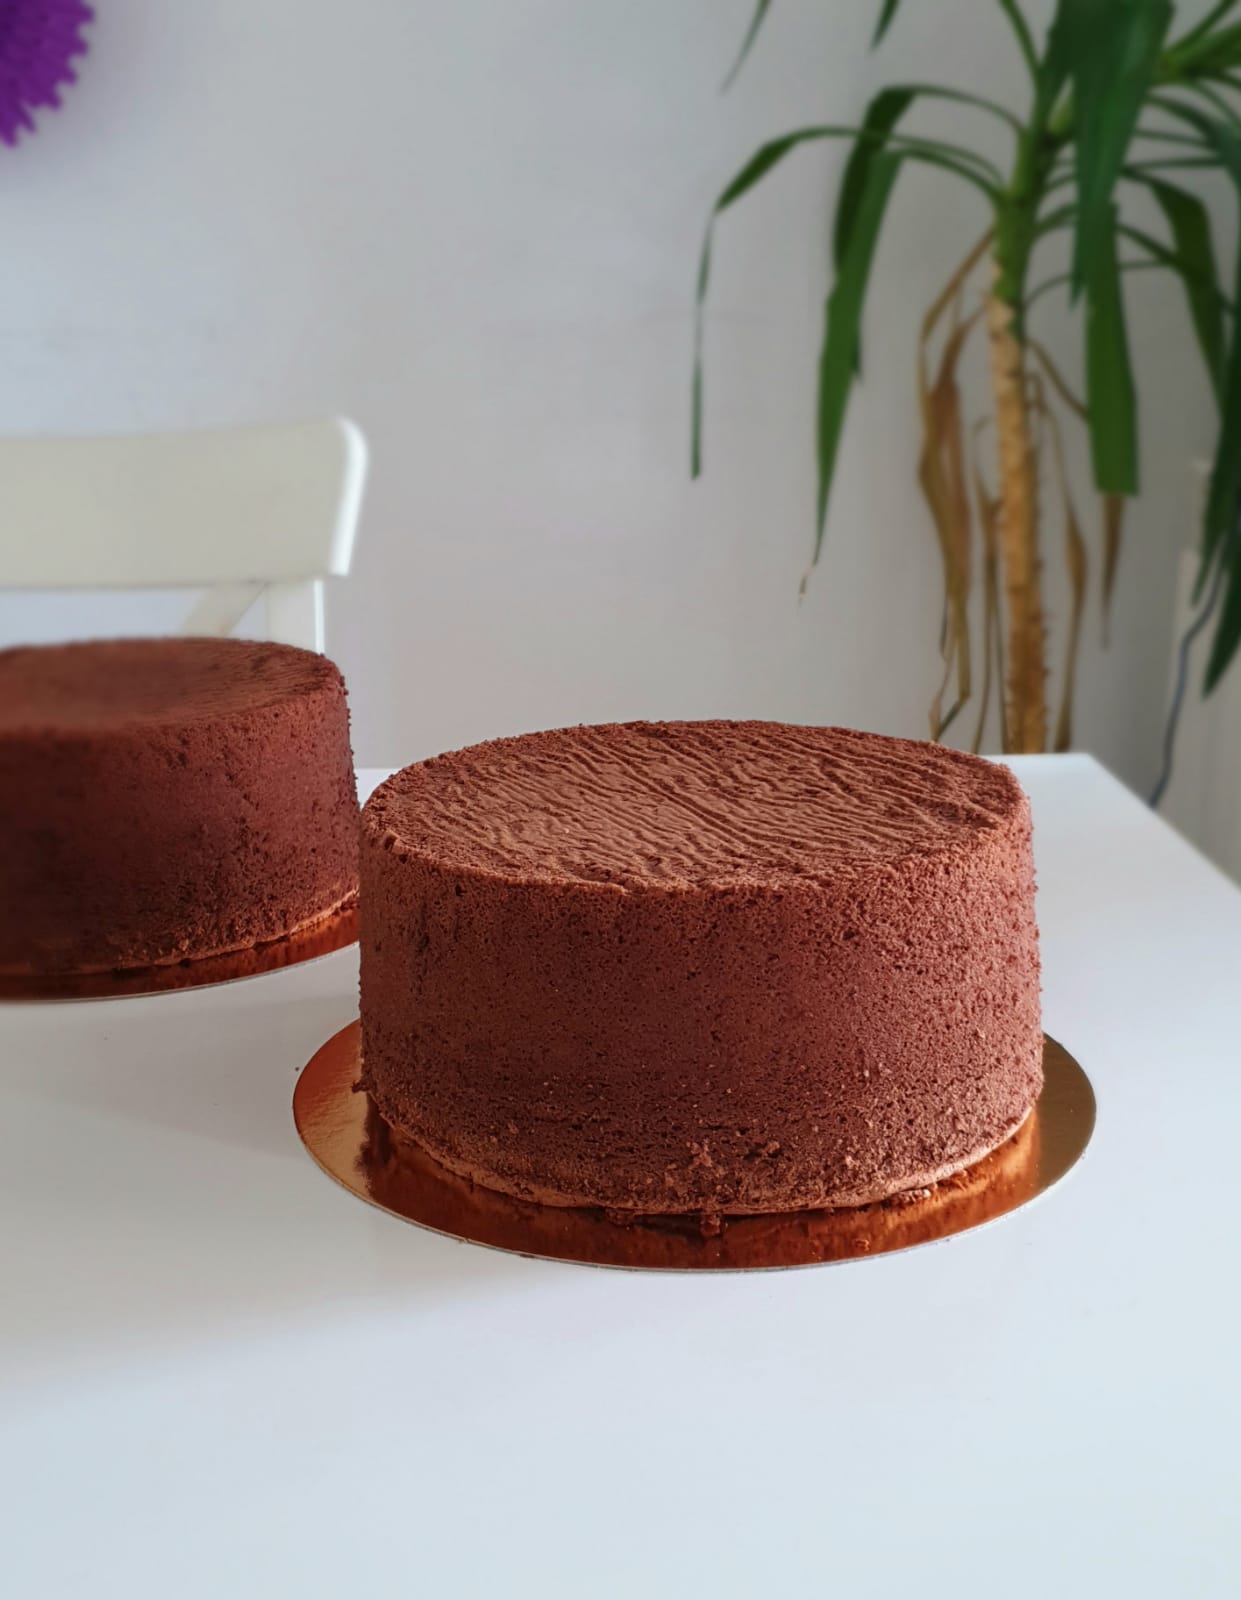 inertia Orthodox Shabby עוגת שוקולד גבוהה - הדר שפירא